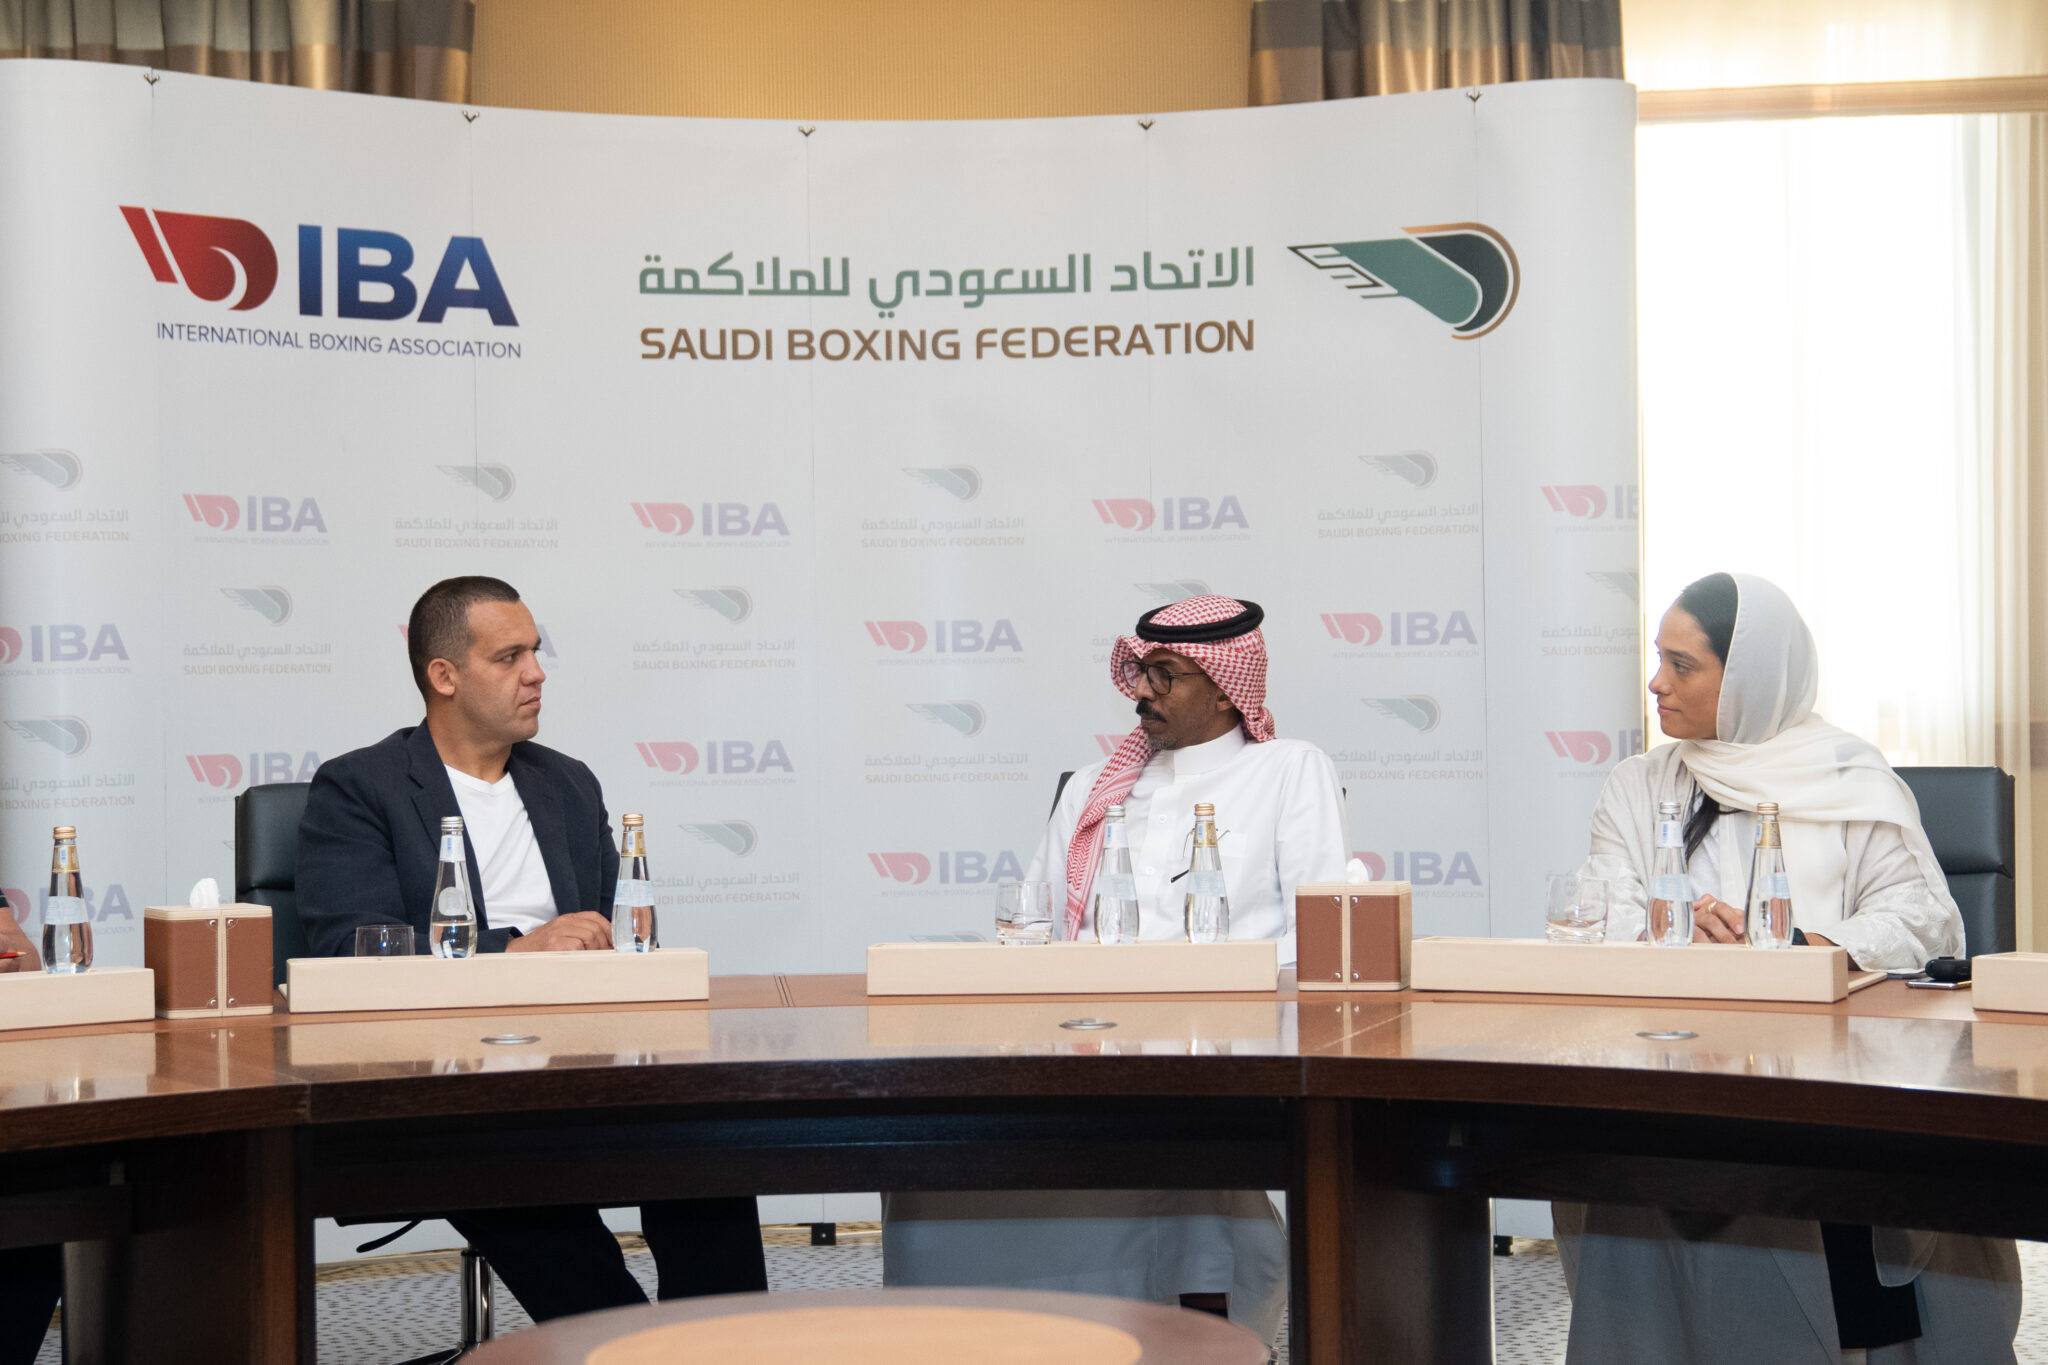 IBA President Umar Kremlev, left, with Saudi Arabian Boxing Federation President Abdullah Hamad Al Harbi and vice-president Rasha Mohamed Al-Khamis ©IBA